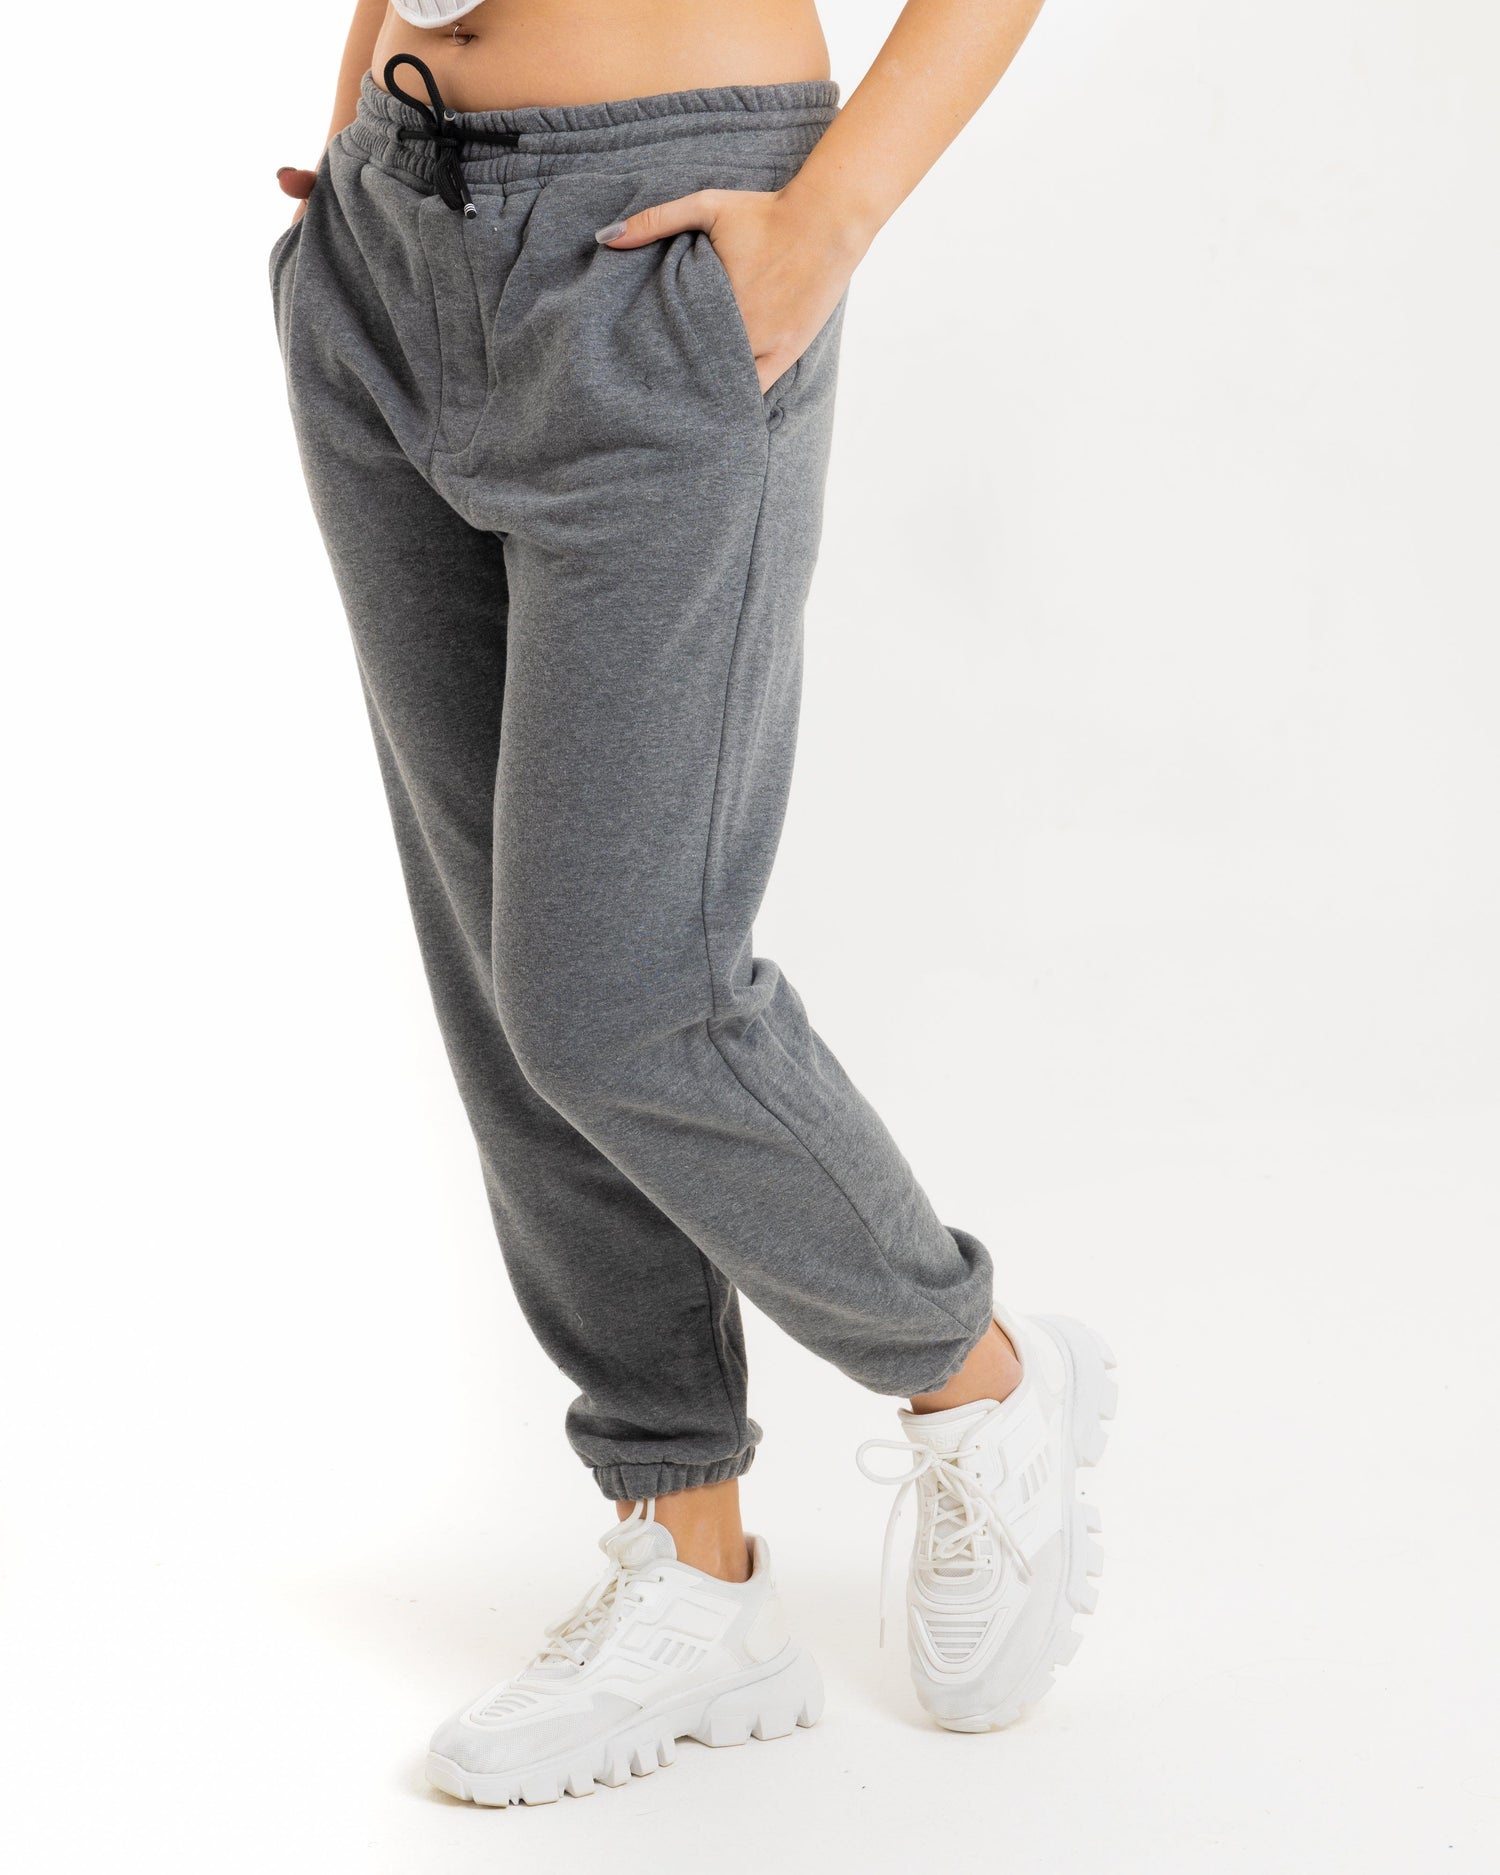 Basic gray sweatpants